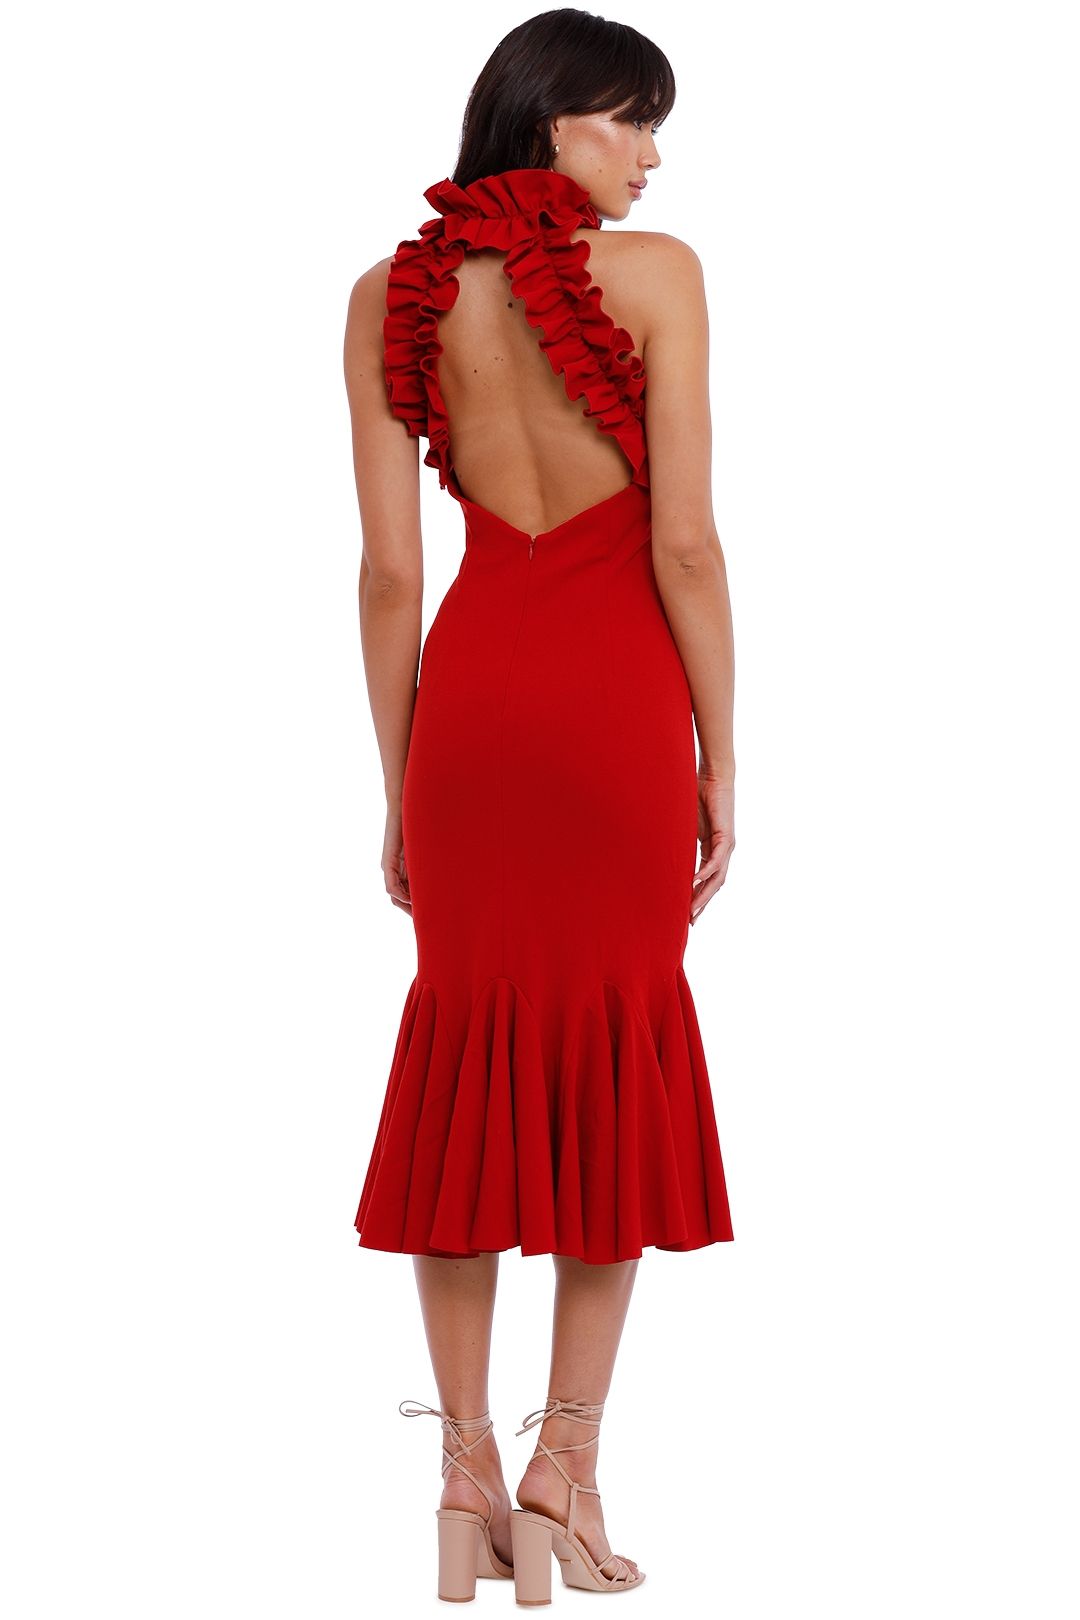 Elliatt Composure Dress Scarlet backless